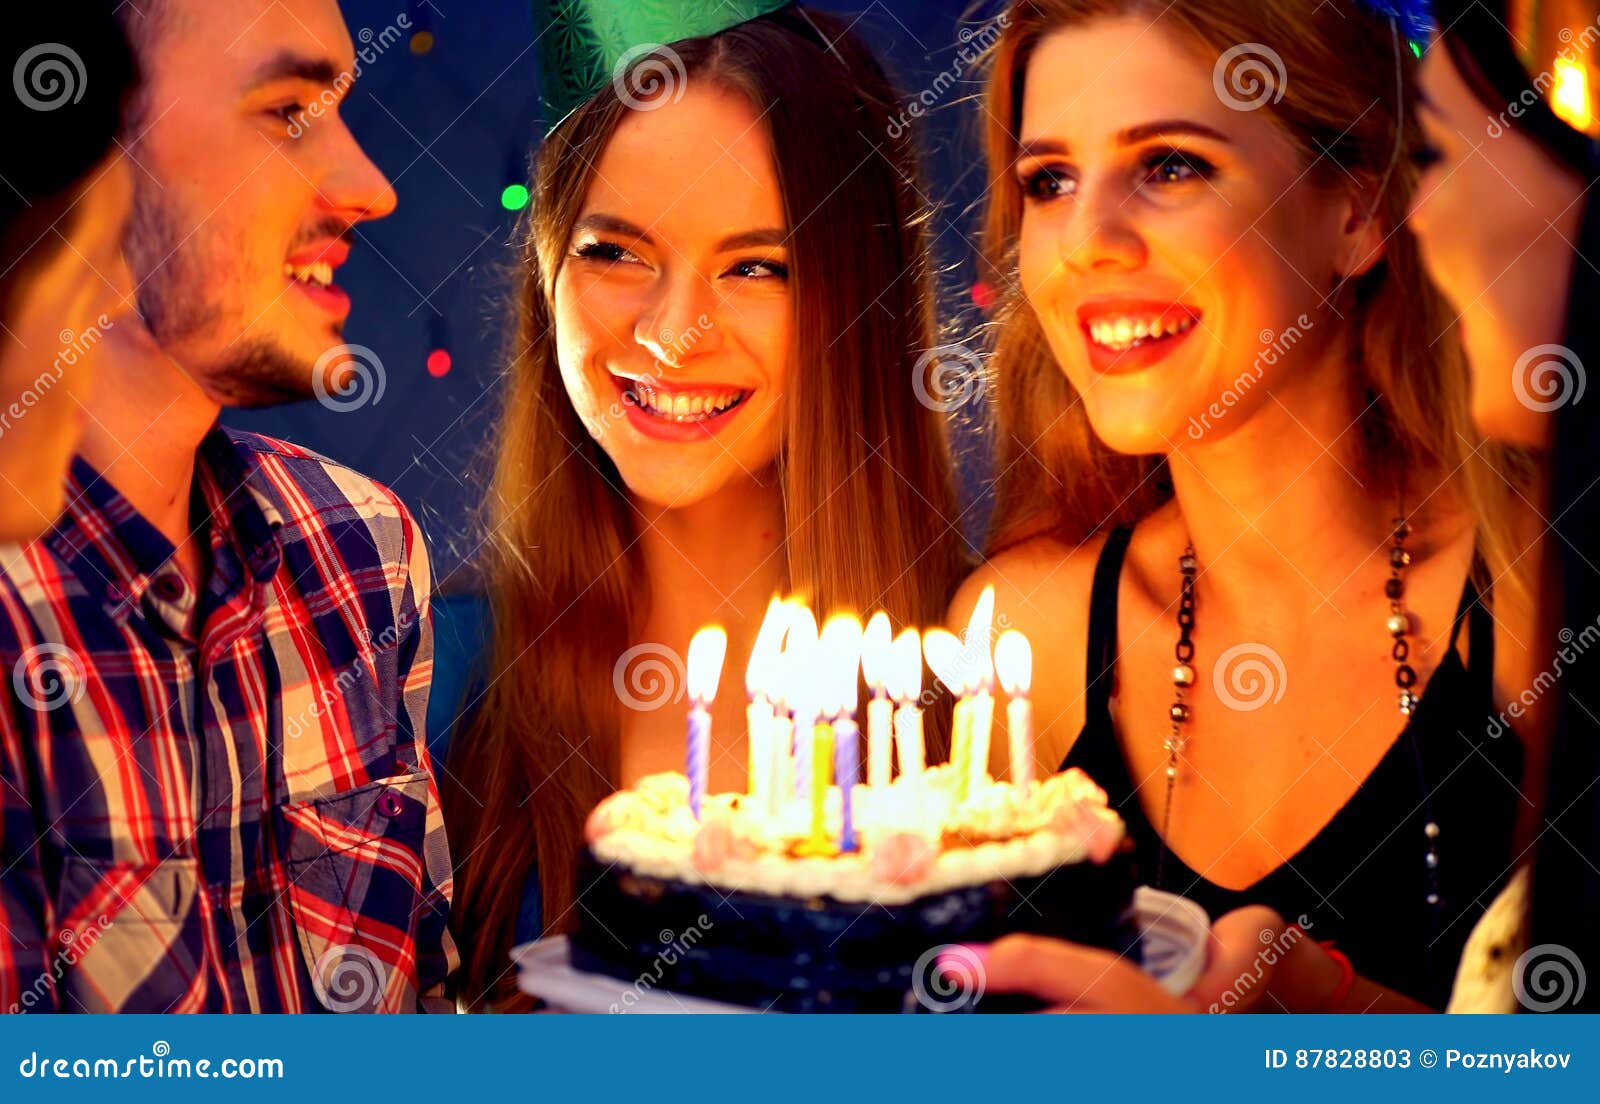 96,070 Happy Birthday Cake Stock Photos - Free & Royalty-Free Stock Photos  from Dreamstime